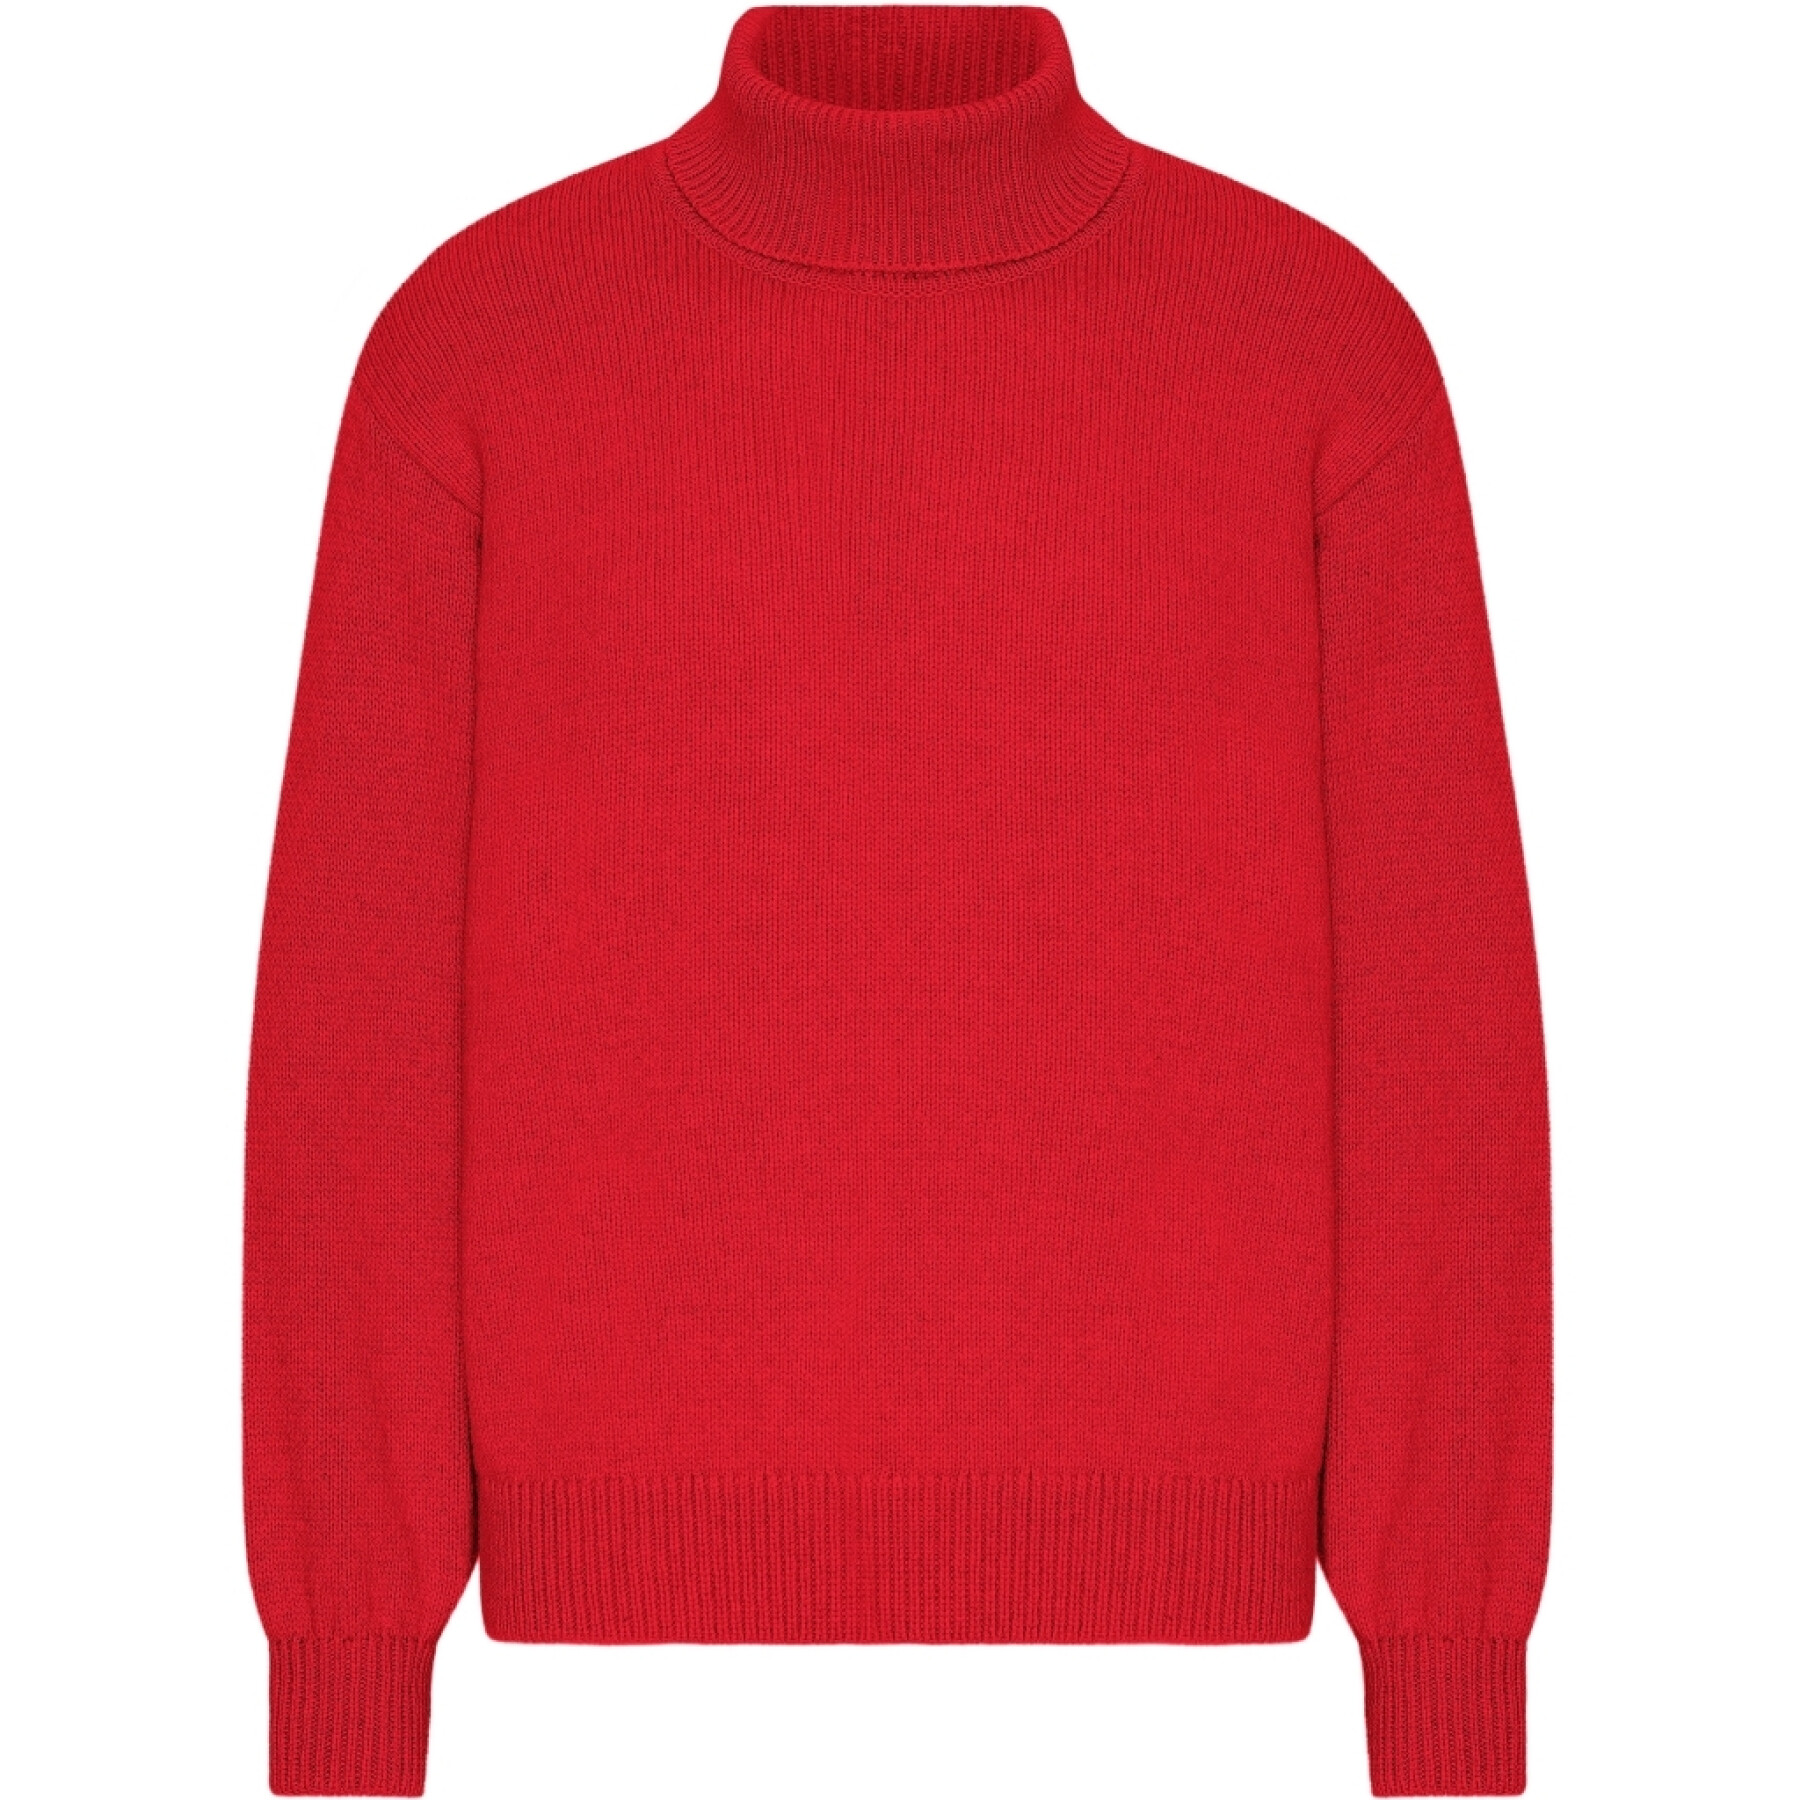 Maglione dolcevita Colorful Standard Scarlet Red